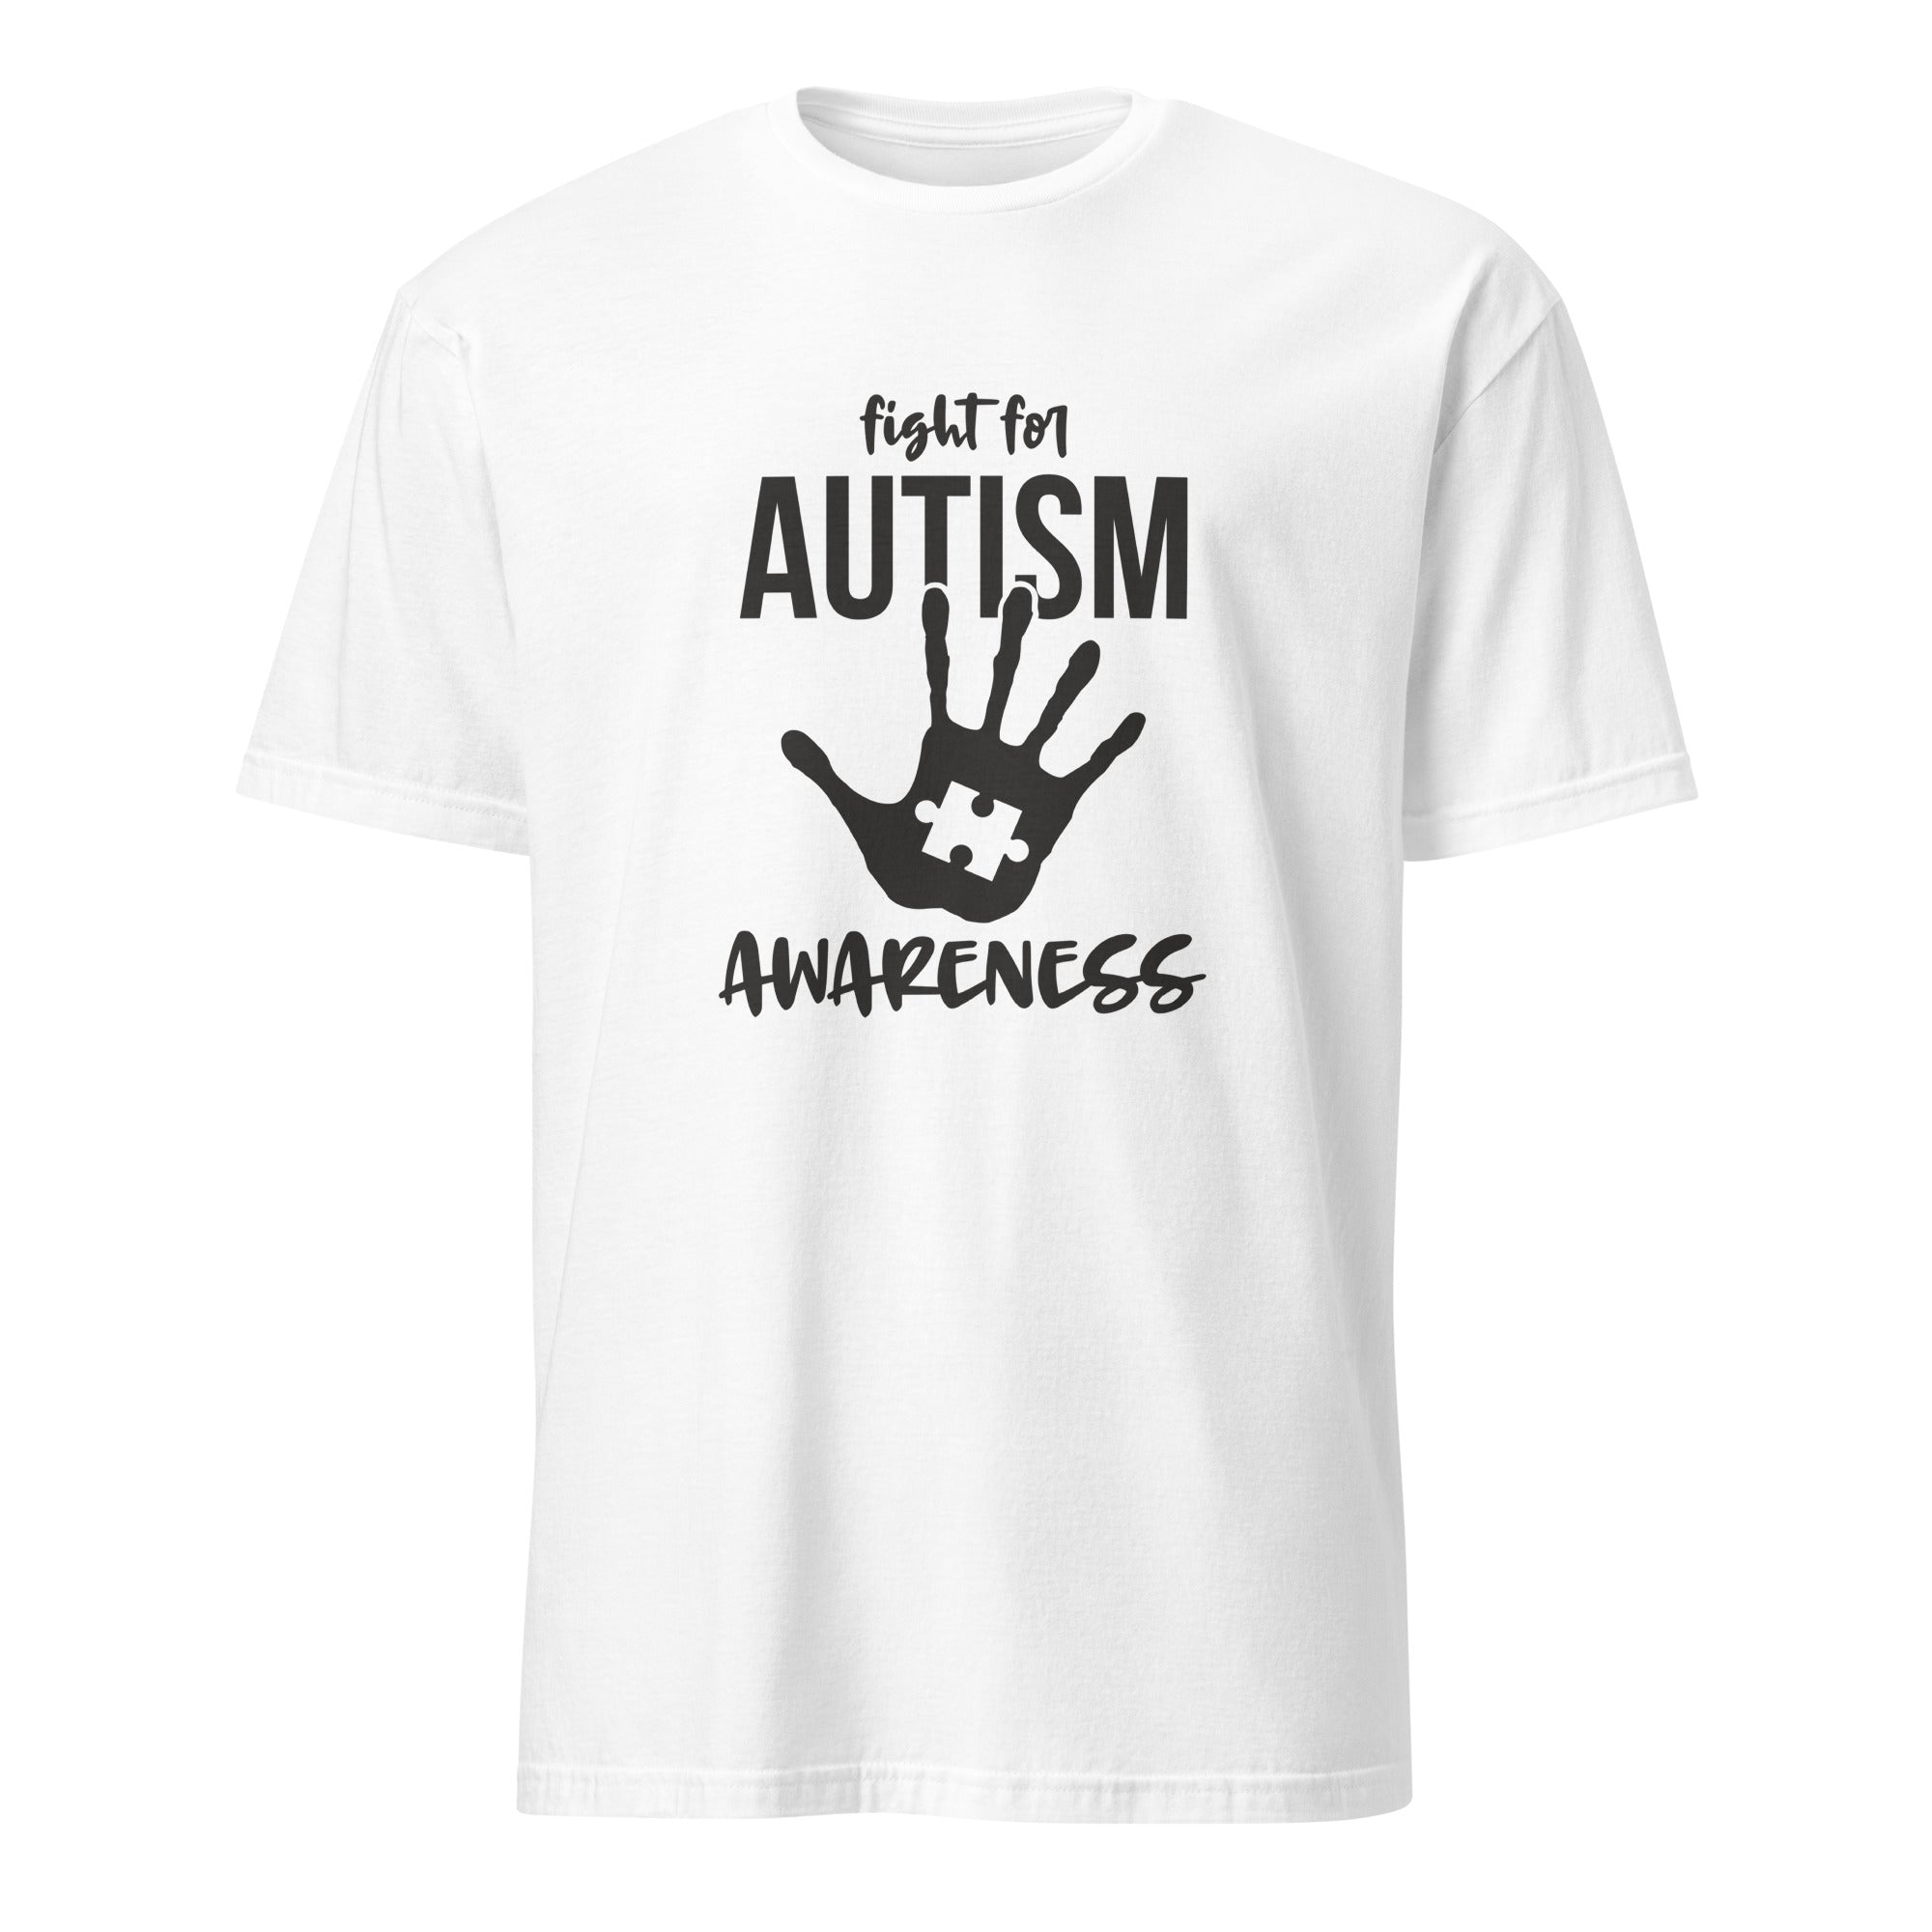 Short-Sleeve Unisex T-Shirt- Fight for autism awareness